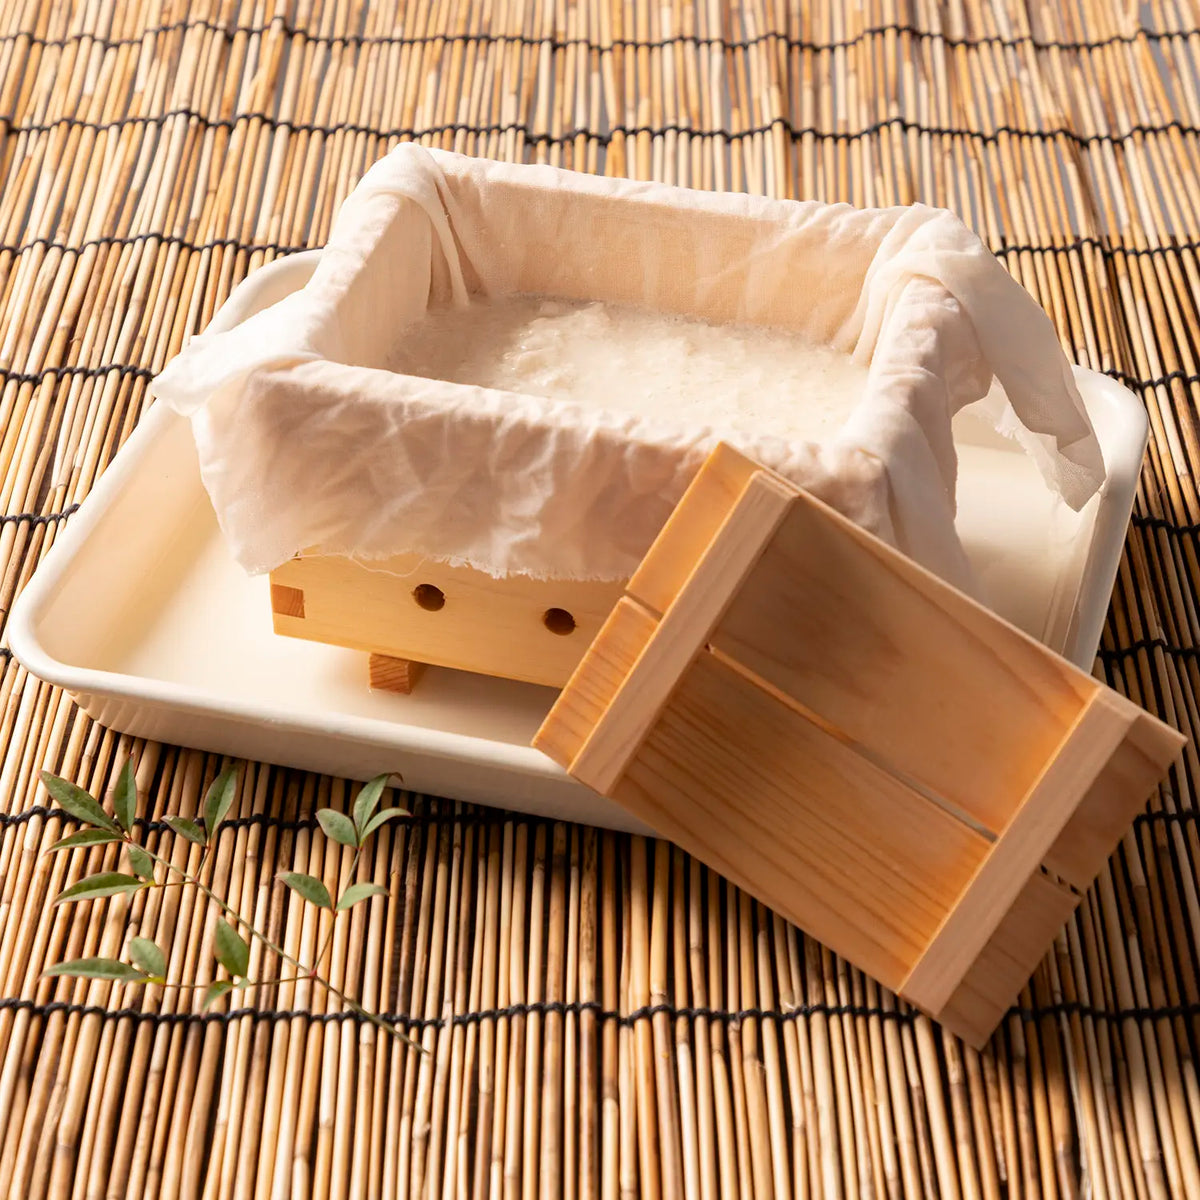 Cabilock Tofu Cutter Plastic Rectangle Handmade Press Maker Food